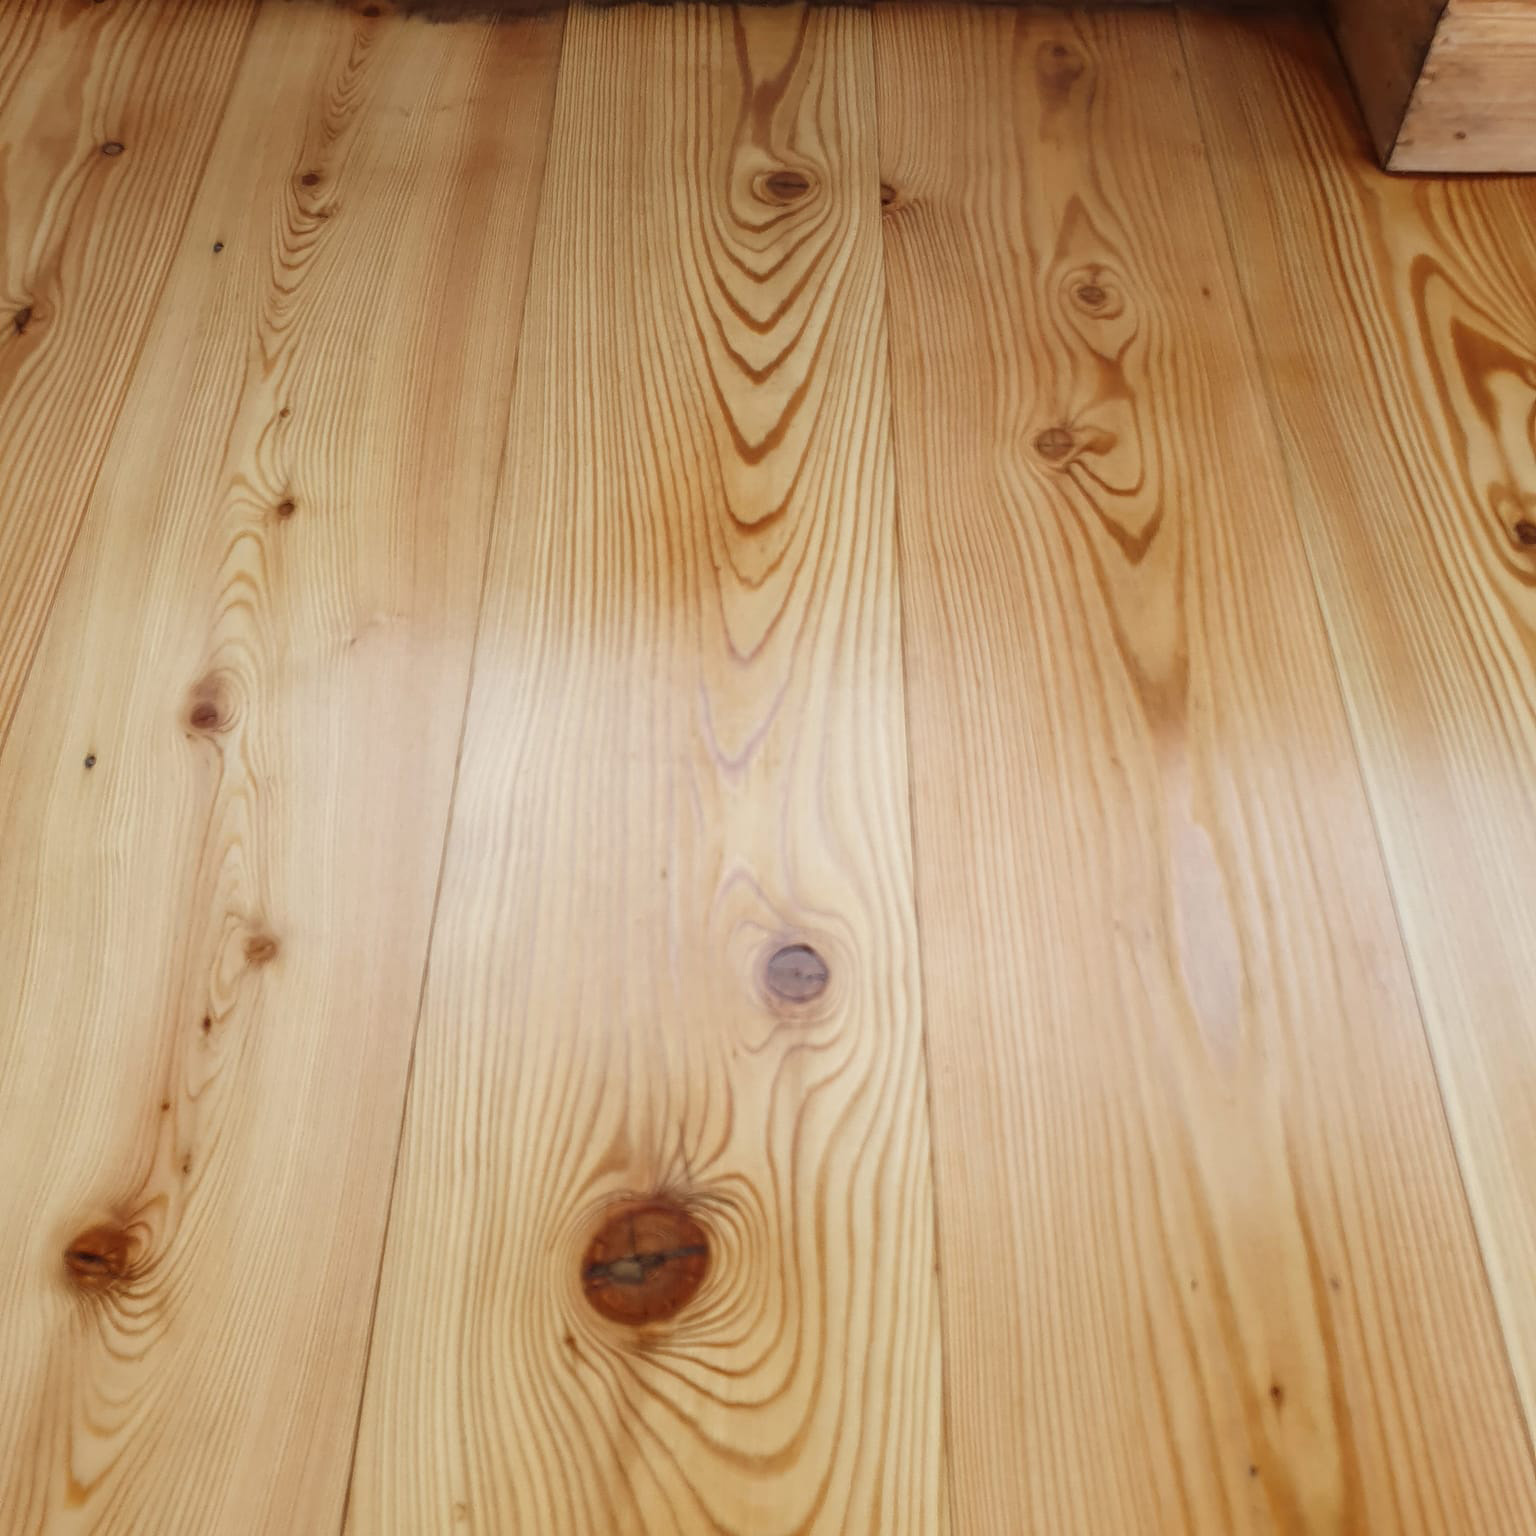 Sanded and polished hard wood floor